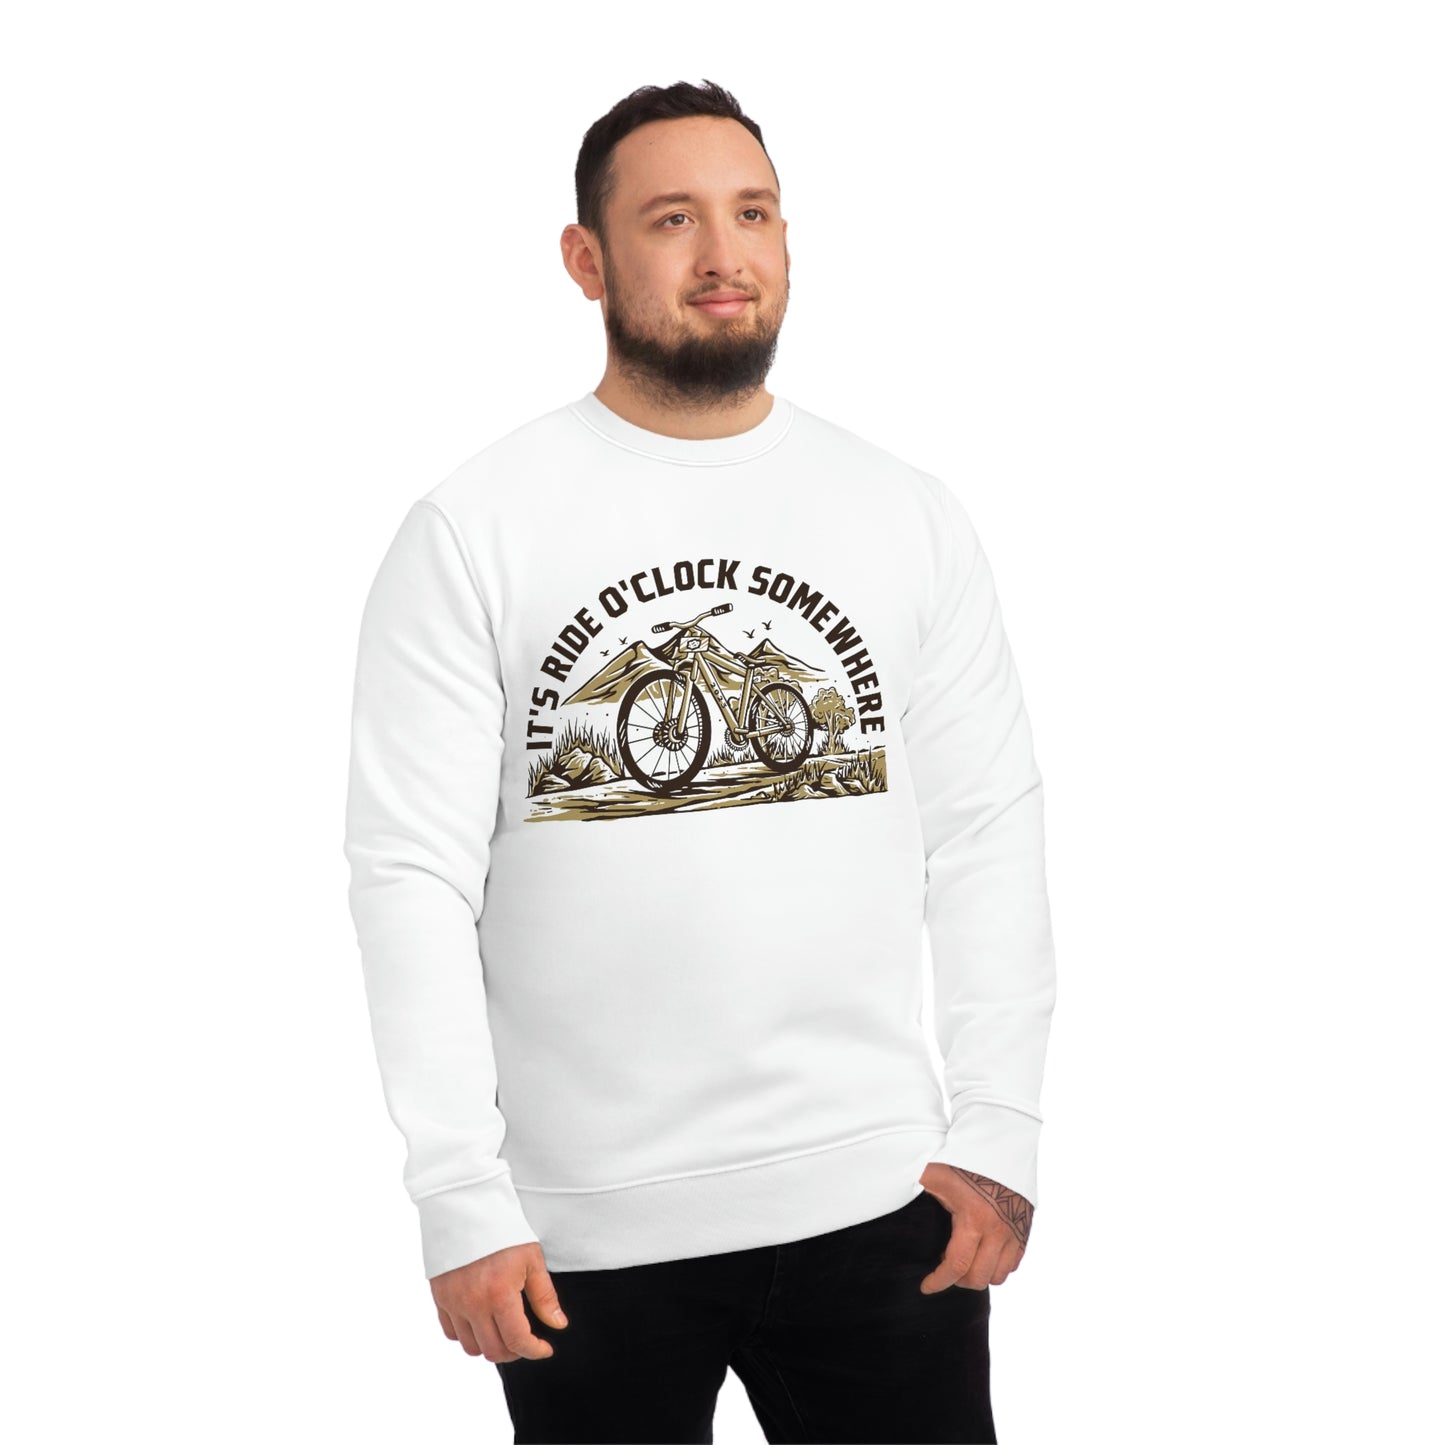 2023 529 Garage Limited Edition "It's ride o'clock somewhere" Unisex Changer Sweatshirt